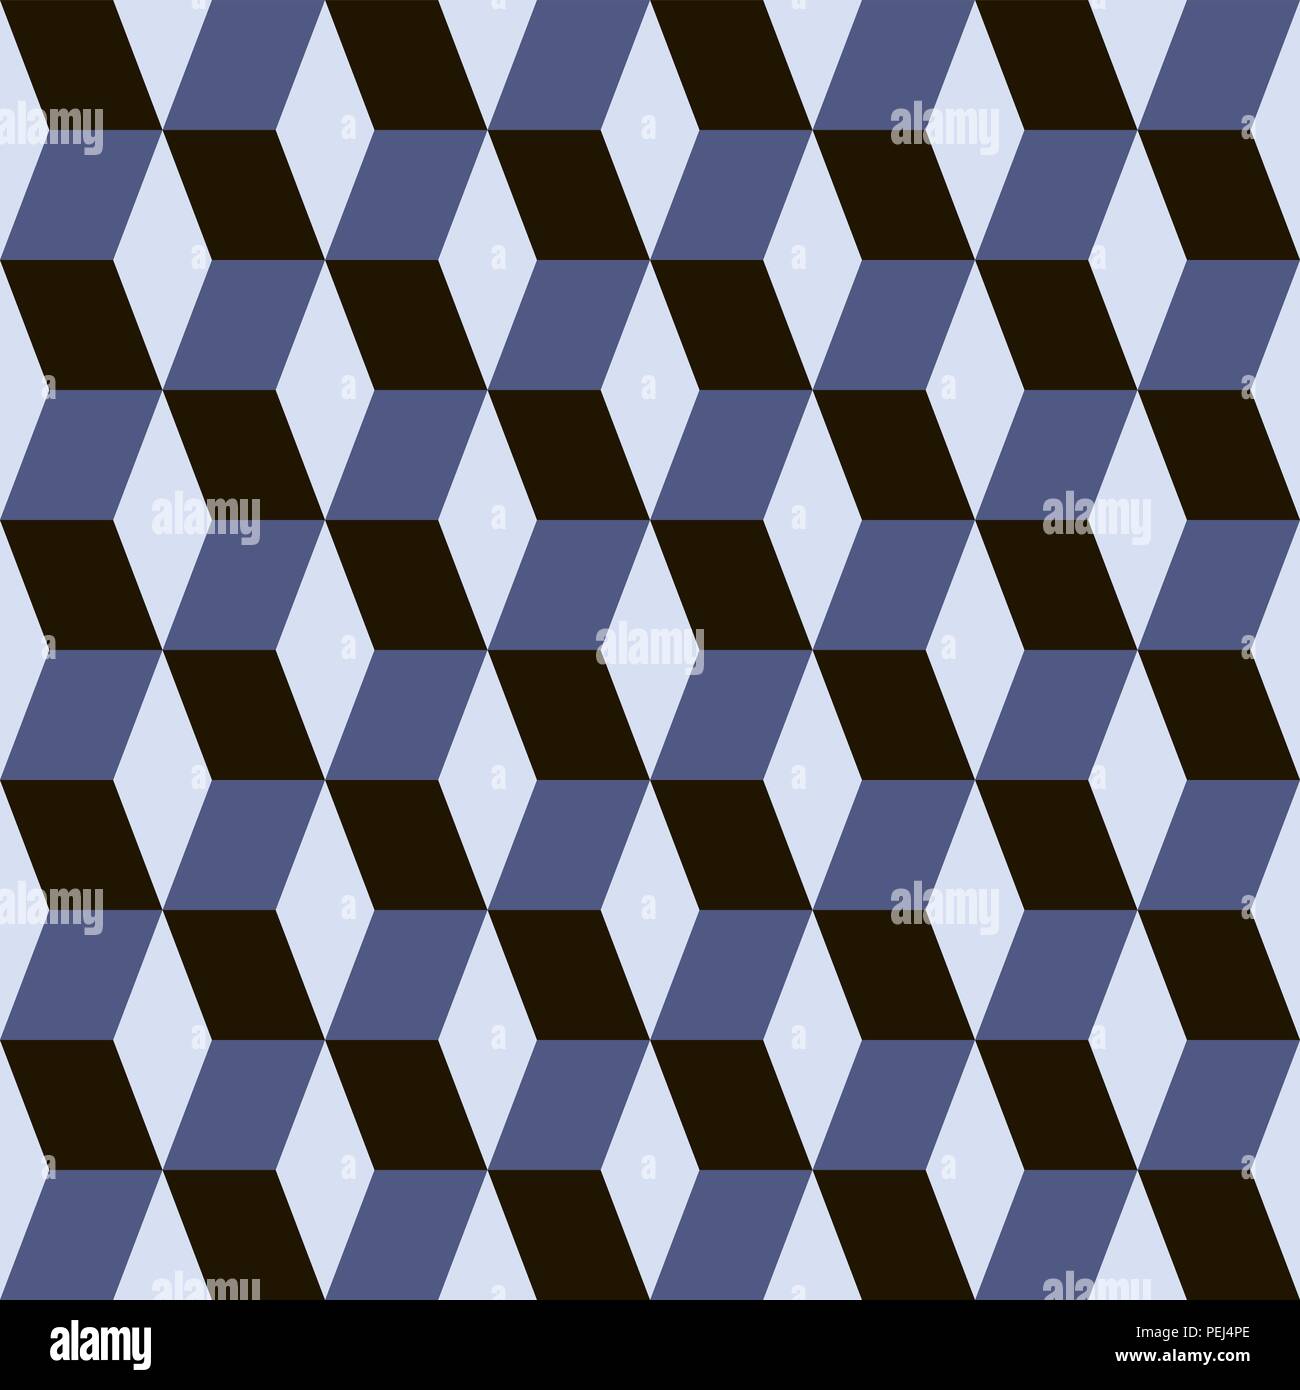 43,012 Blue Optical Illusion Royalty-Free Images, Stock Photos